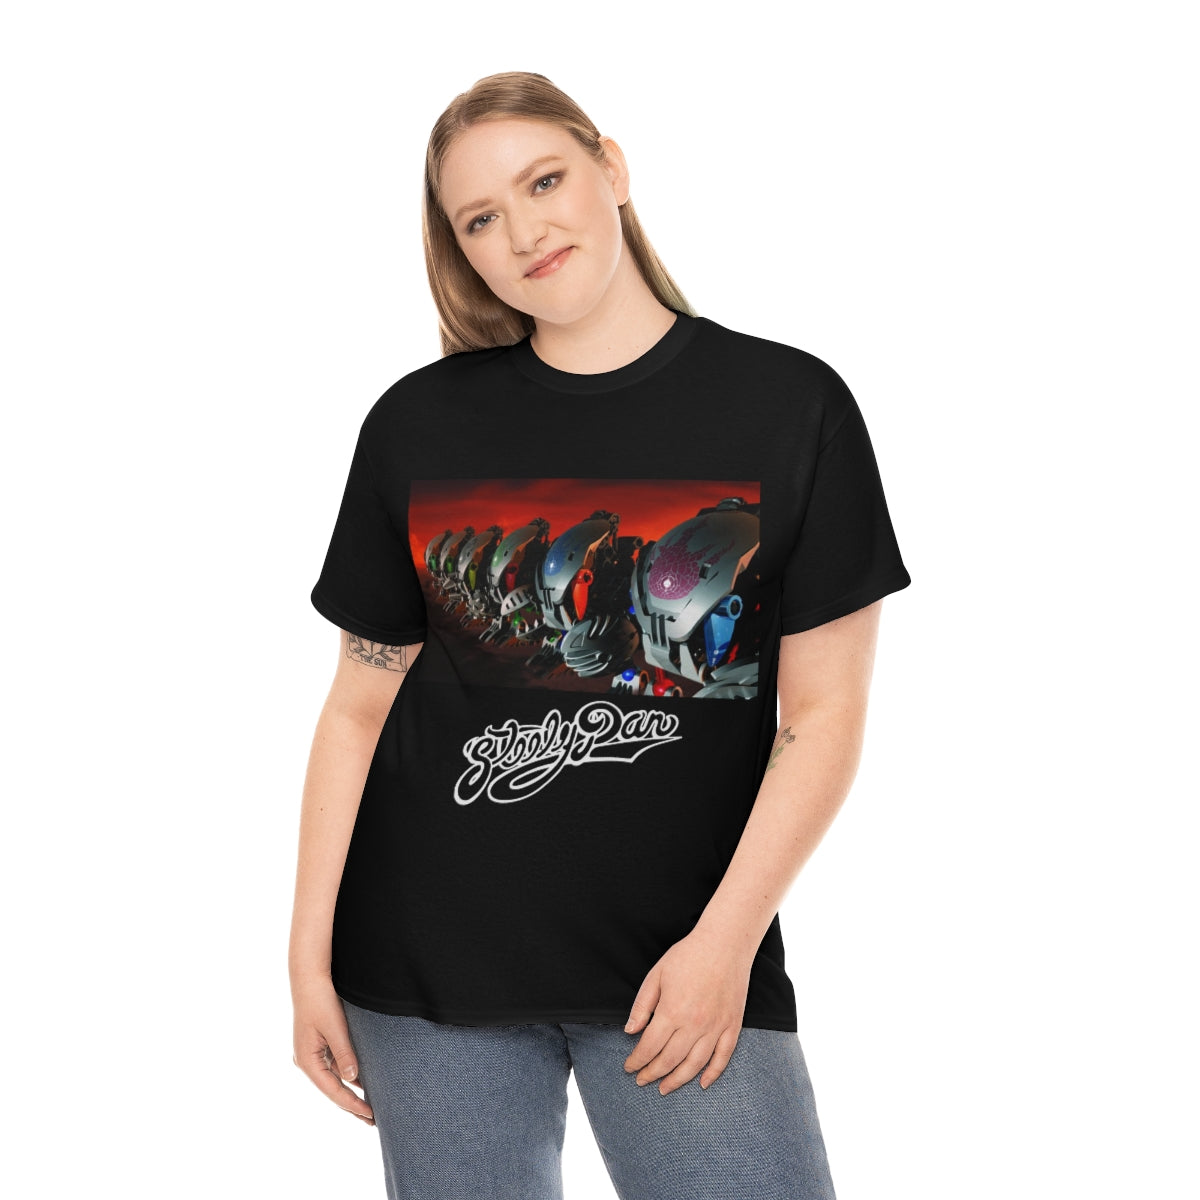 Bionicle Steely Dan Shirt